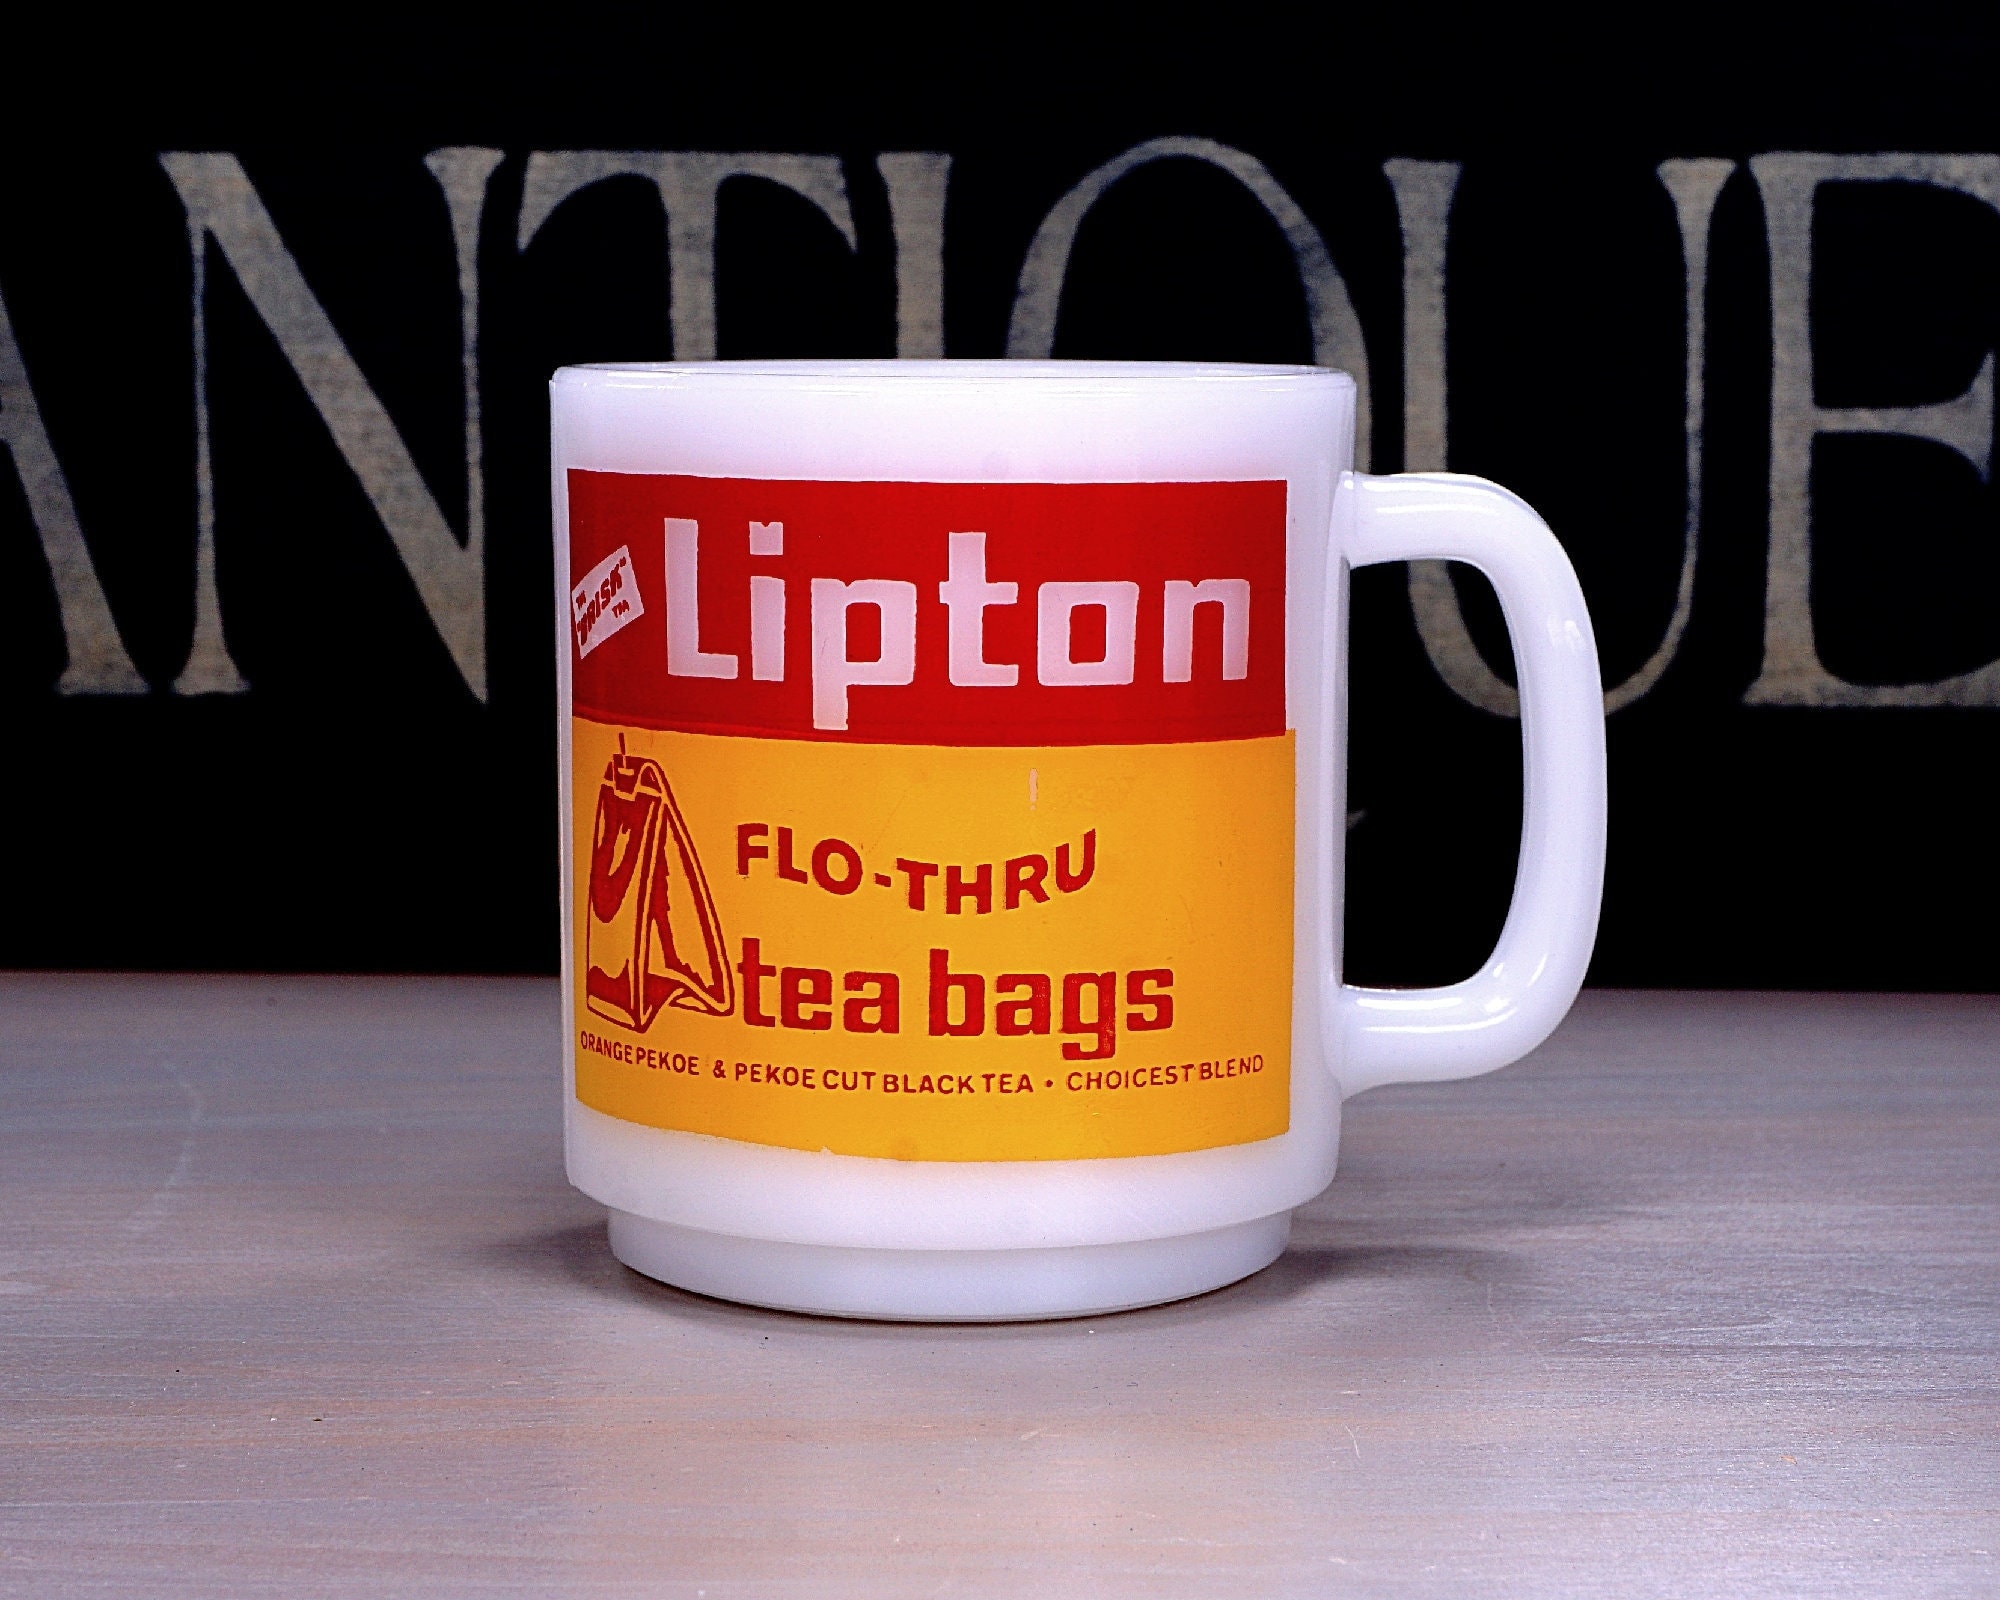 My Lipton tea came with a teacup shaped teabag holder : r